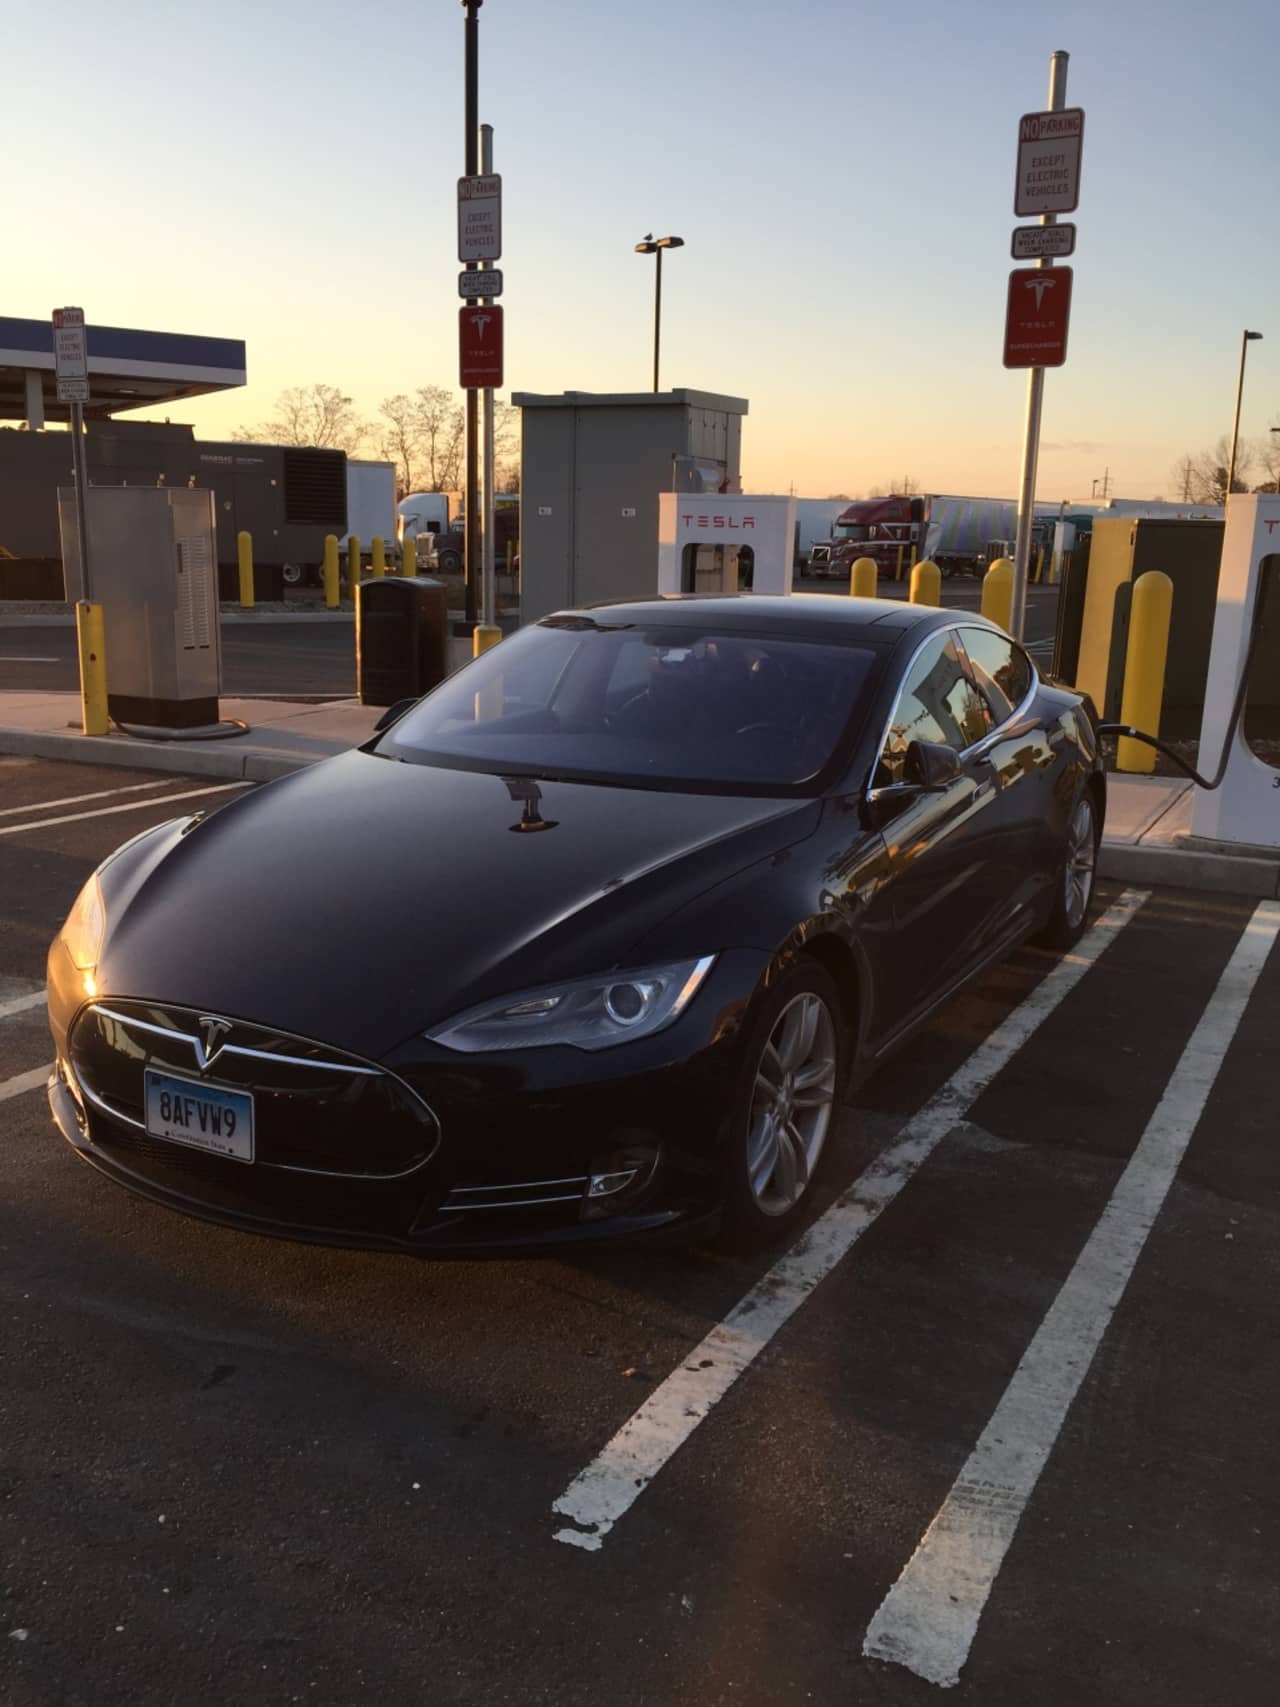 Tesla may be coming to Greenburgh.